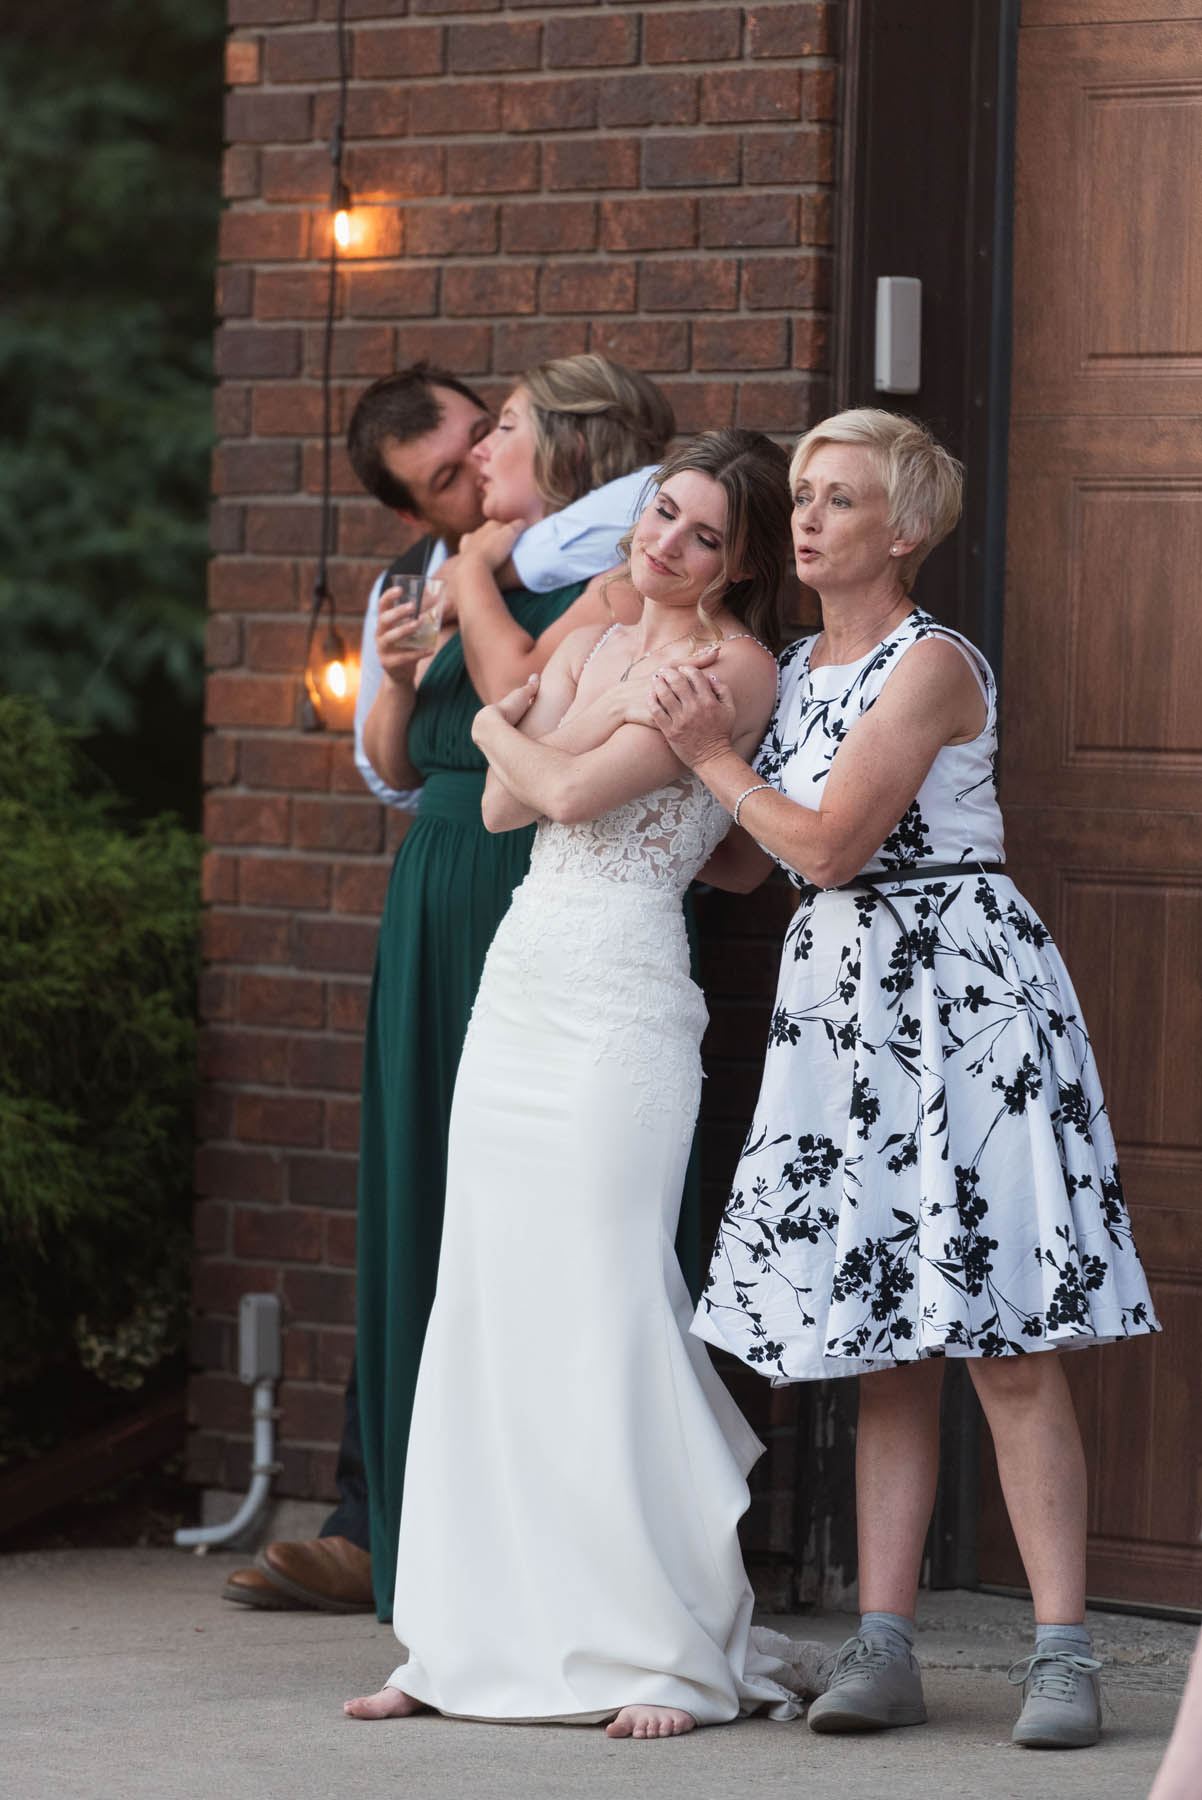 Unforgettable Wedding Memories in Photographer's Lens - Erin + Taylor